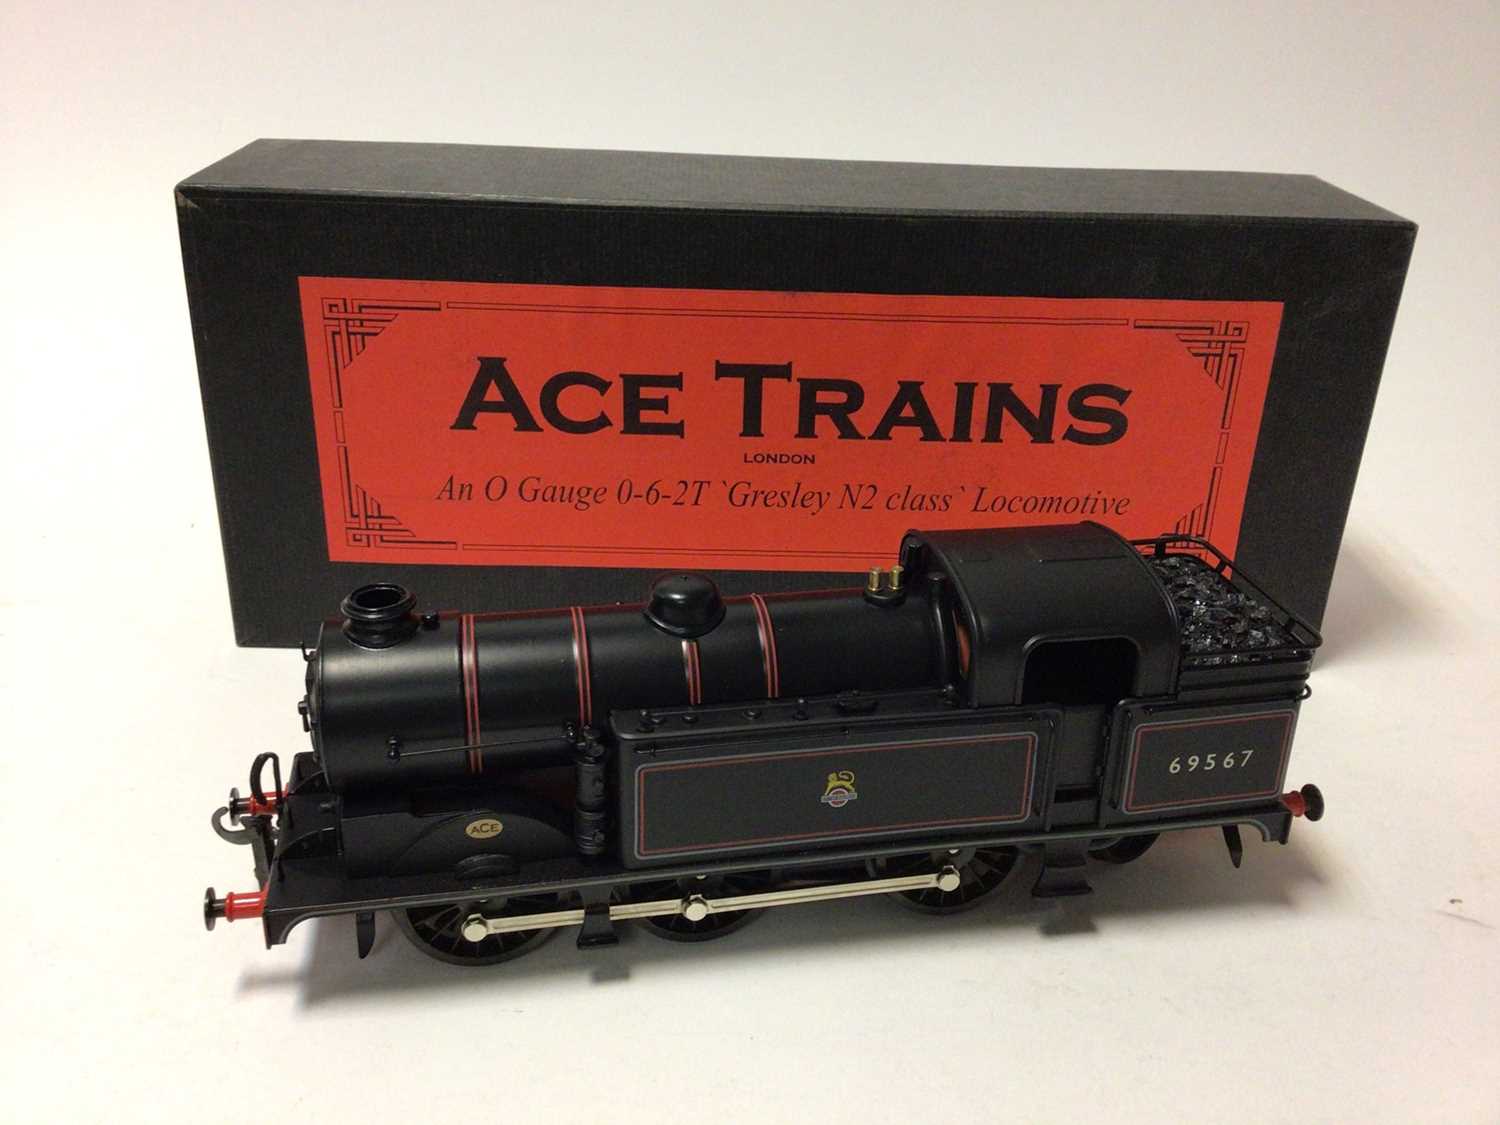 Lot 19 - Ace Trains O gauge Pre 56 BR black 0-6-2T Gresley N2 Class locomotive 69567, in original box